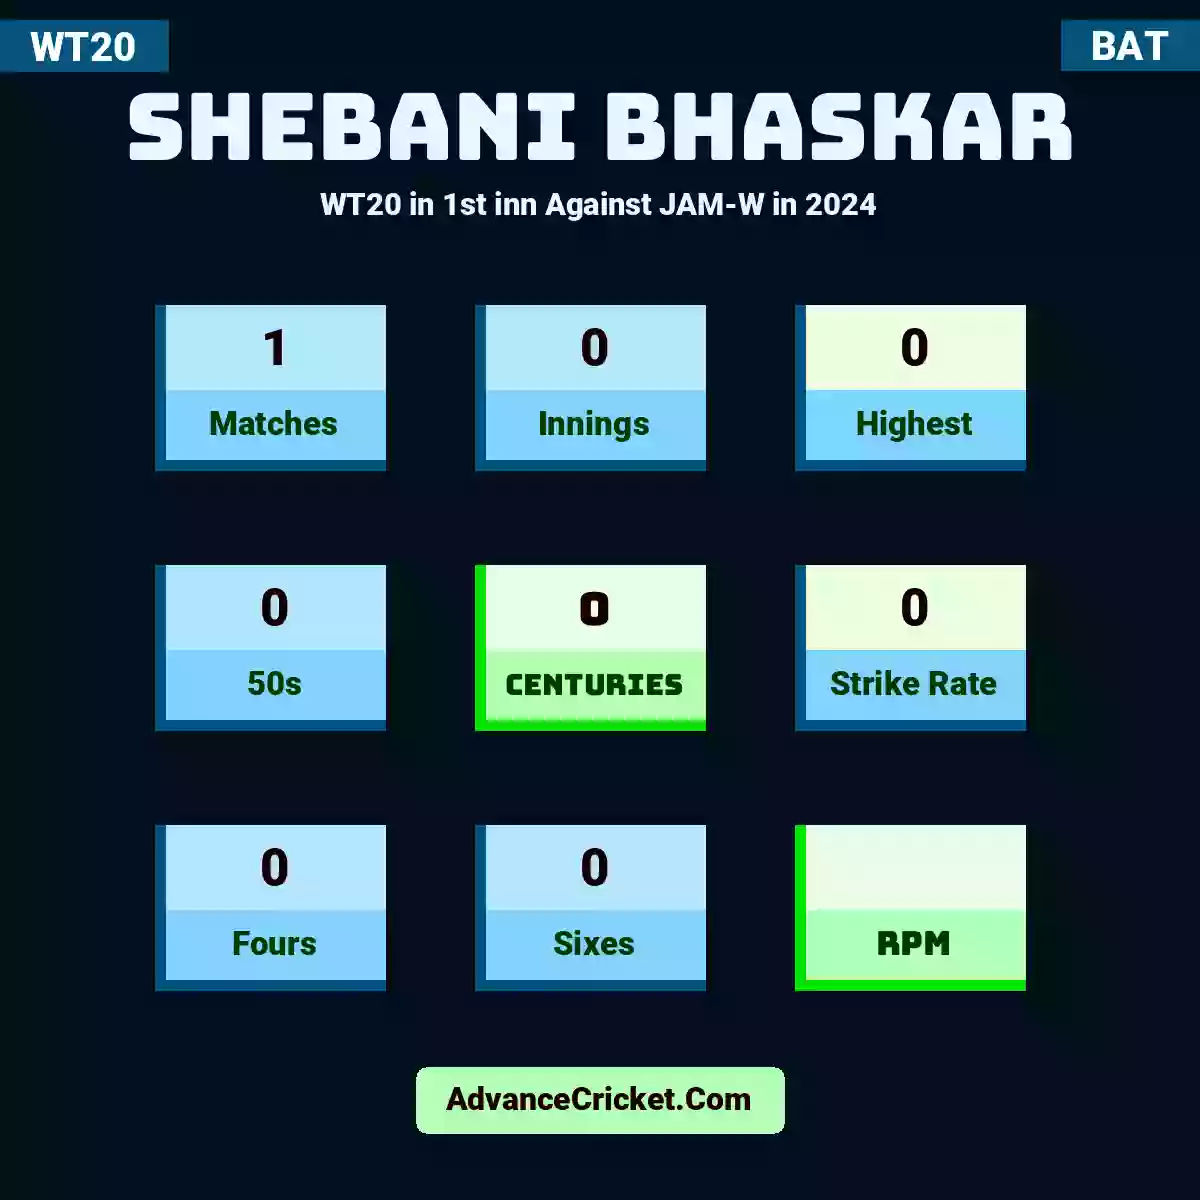 Shebani Bhaskar WT20  in 1st inn Against JAM-W in 2024, Shebani Bhaskar played 1 matches, scored 0 runs as highest, 0 half-centuries, and 0 centuries, with a strike rate of 0. S.Bhaskar hit 0 fours and 0 sixes.